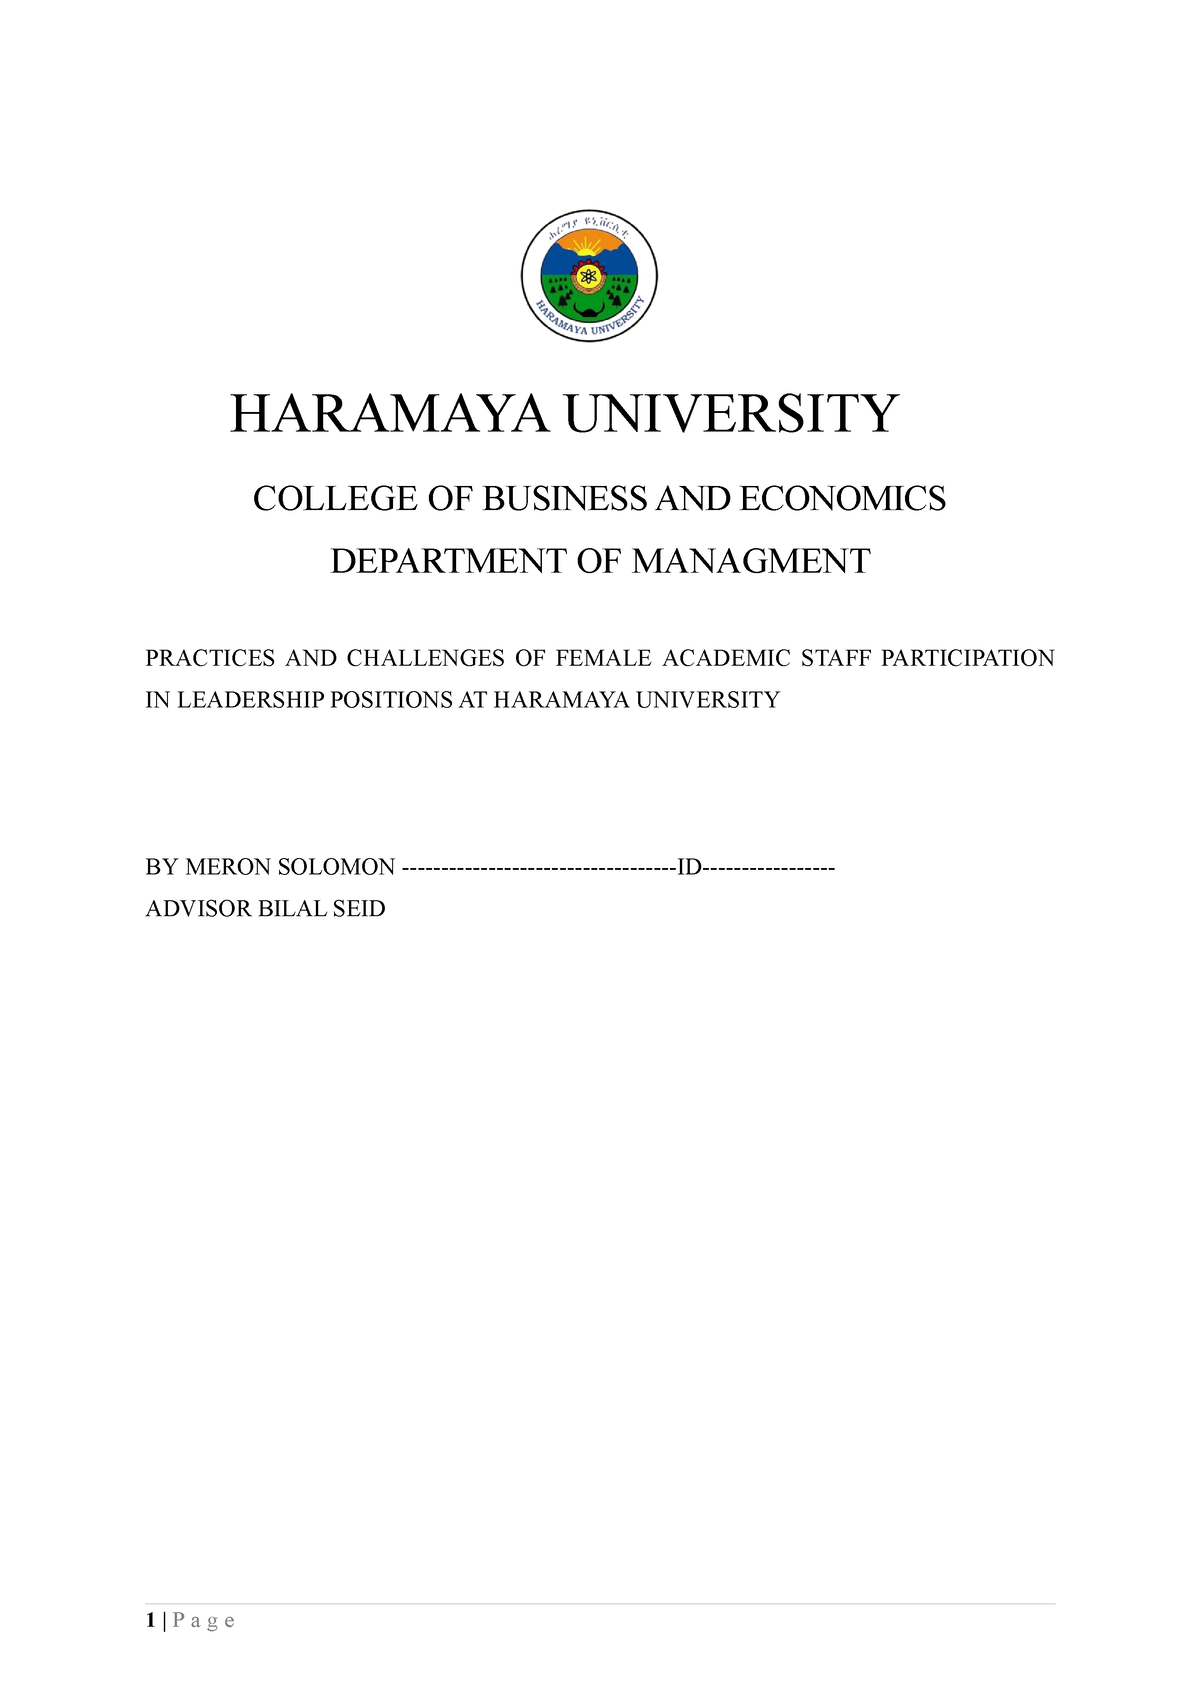 research proposal haramaya university